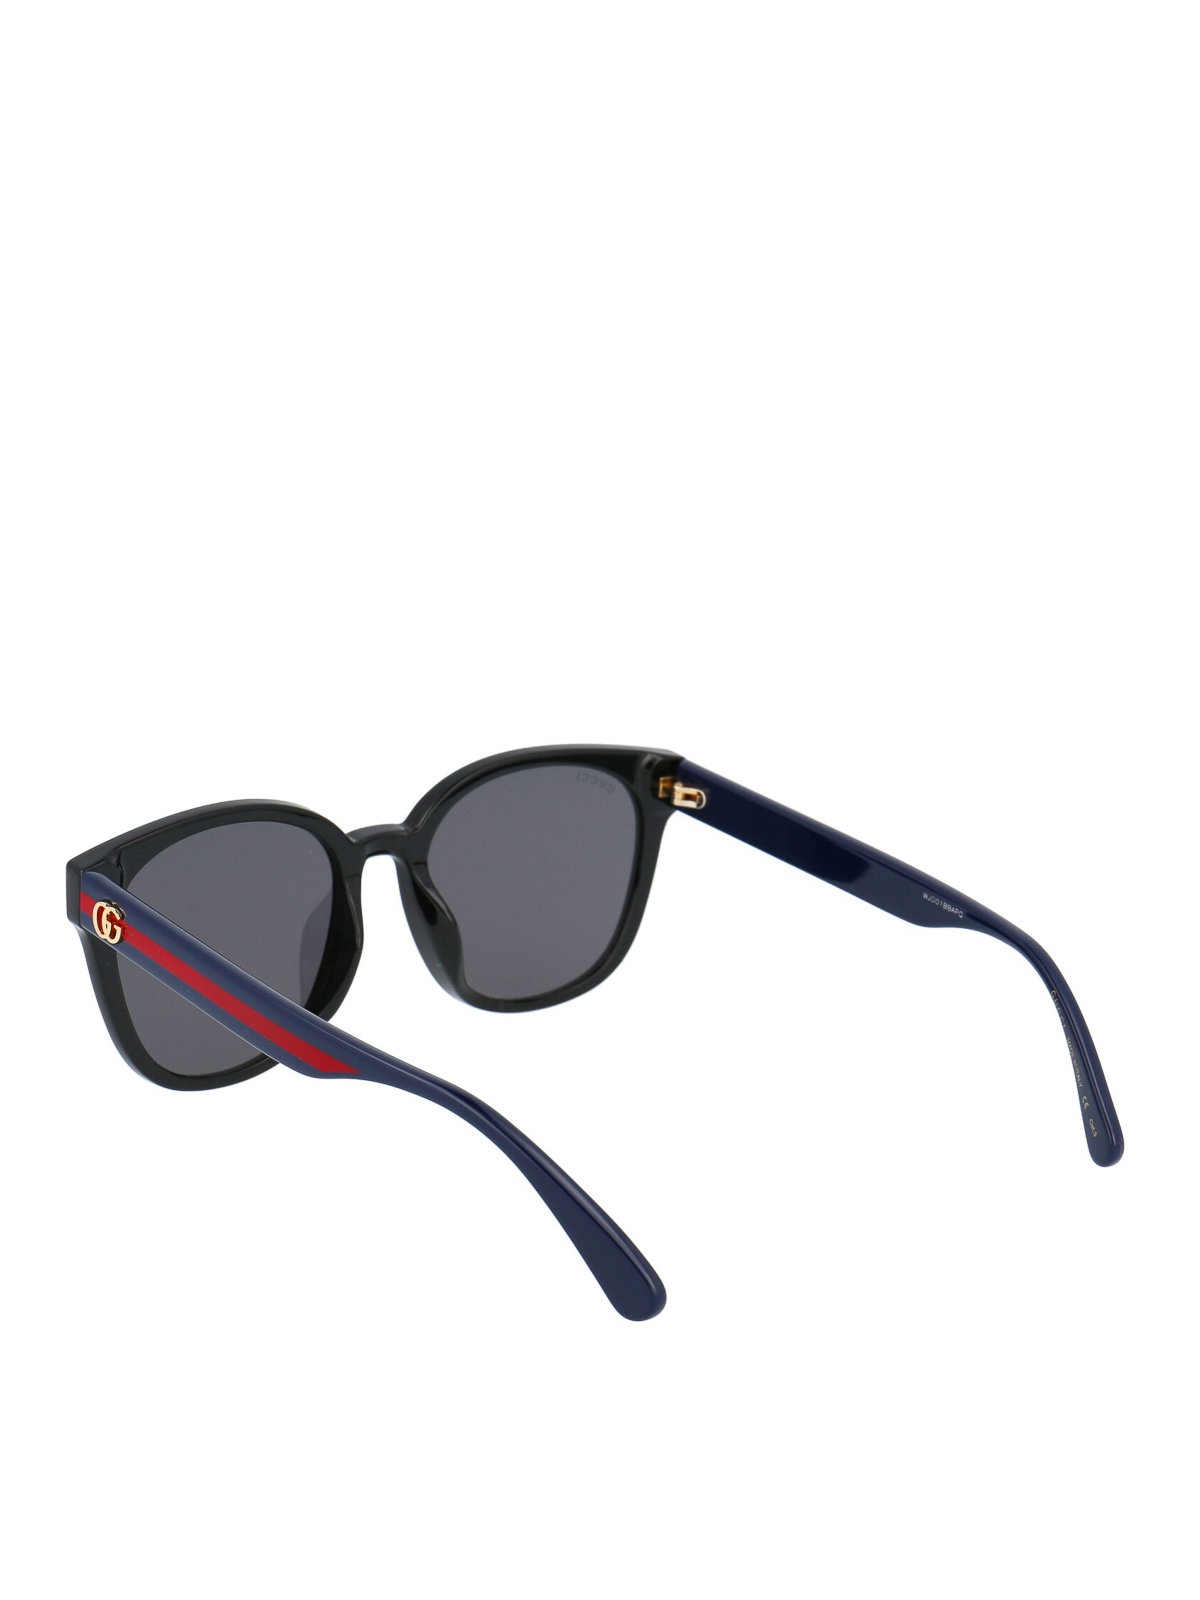 sunglasses shop gucci